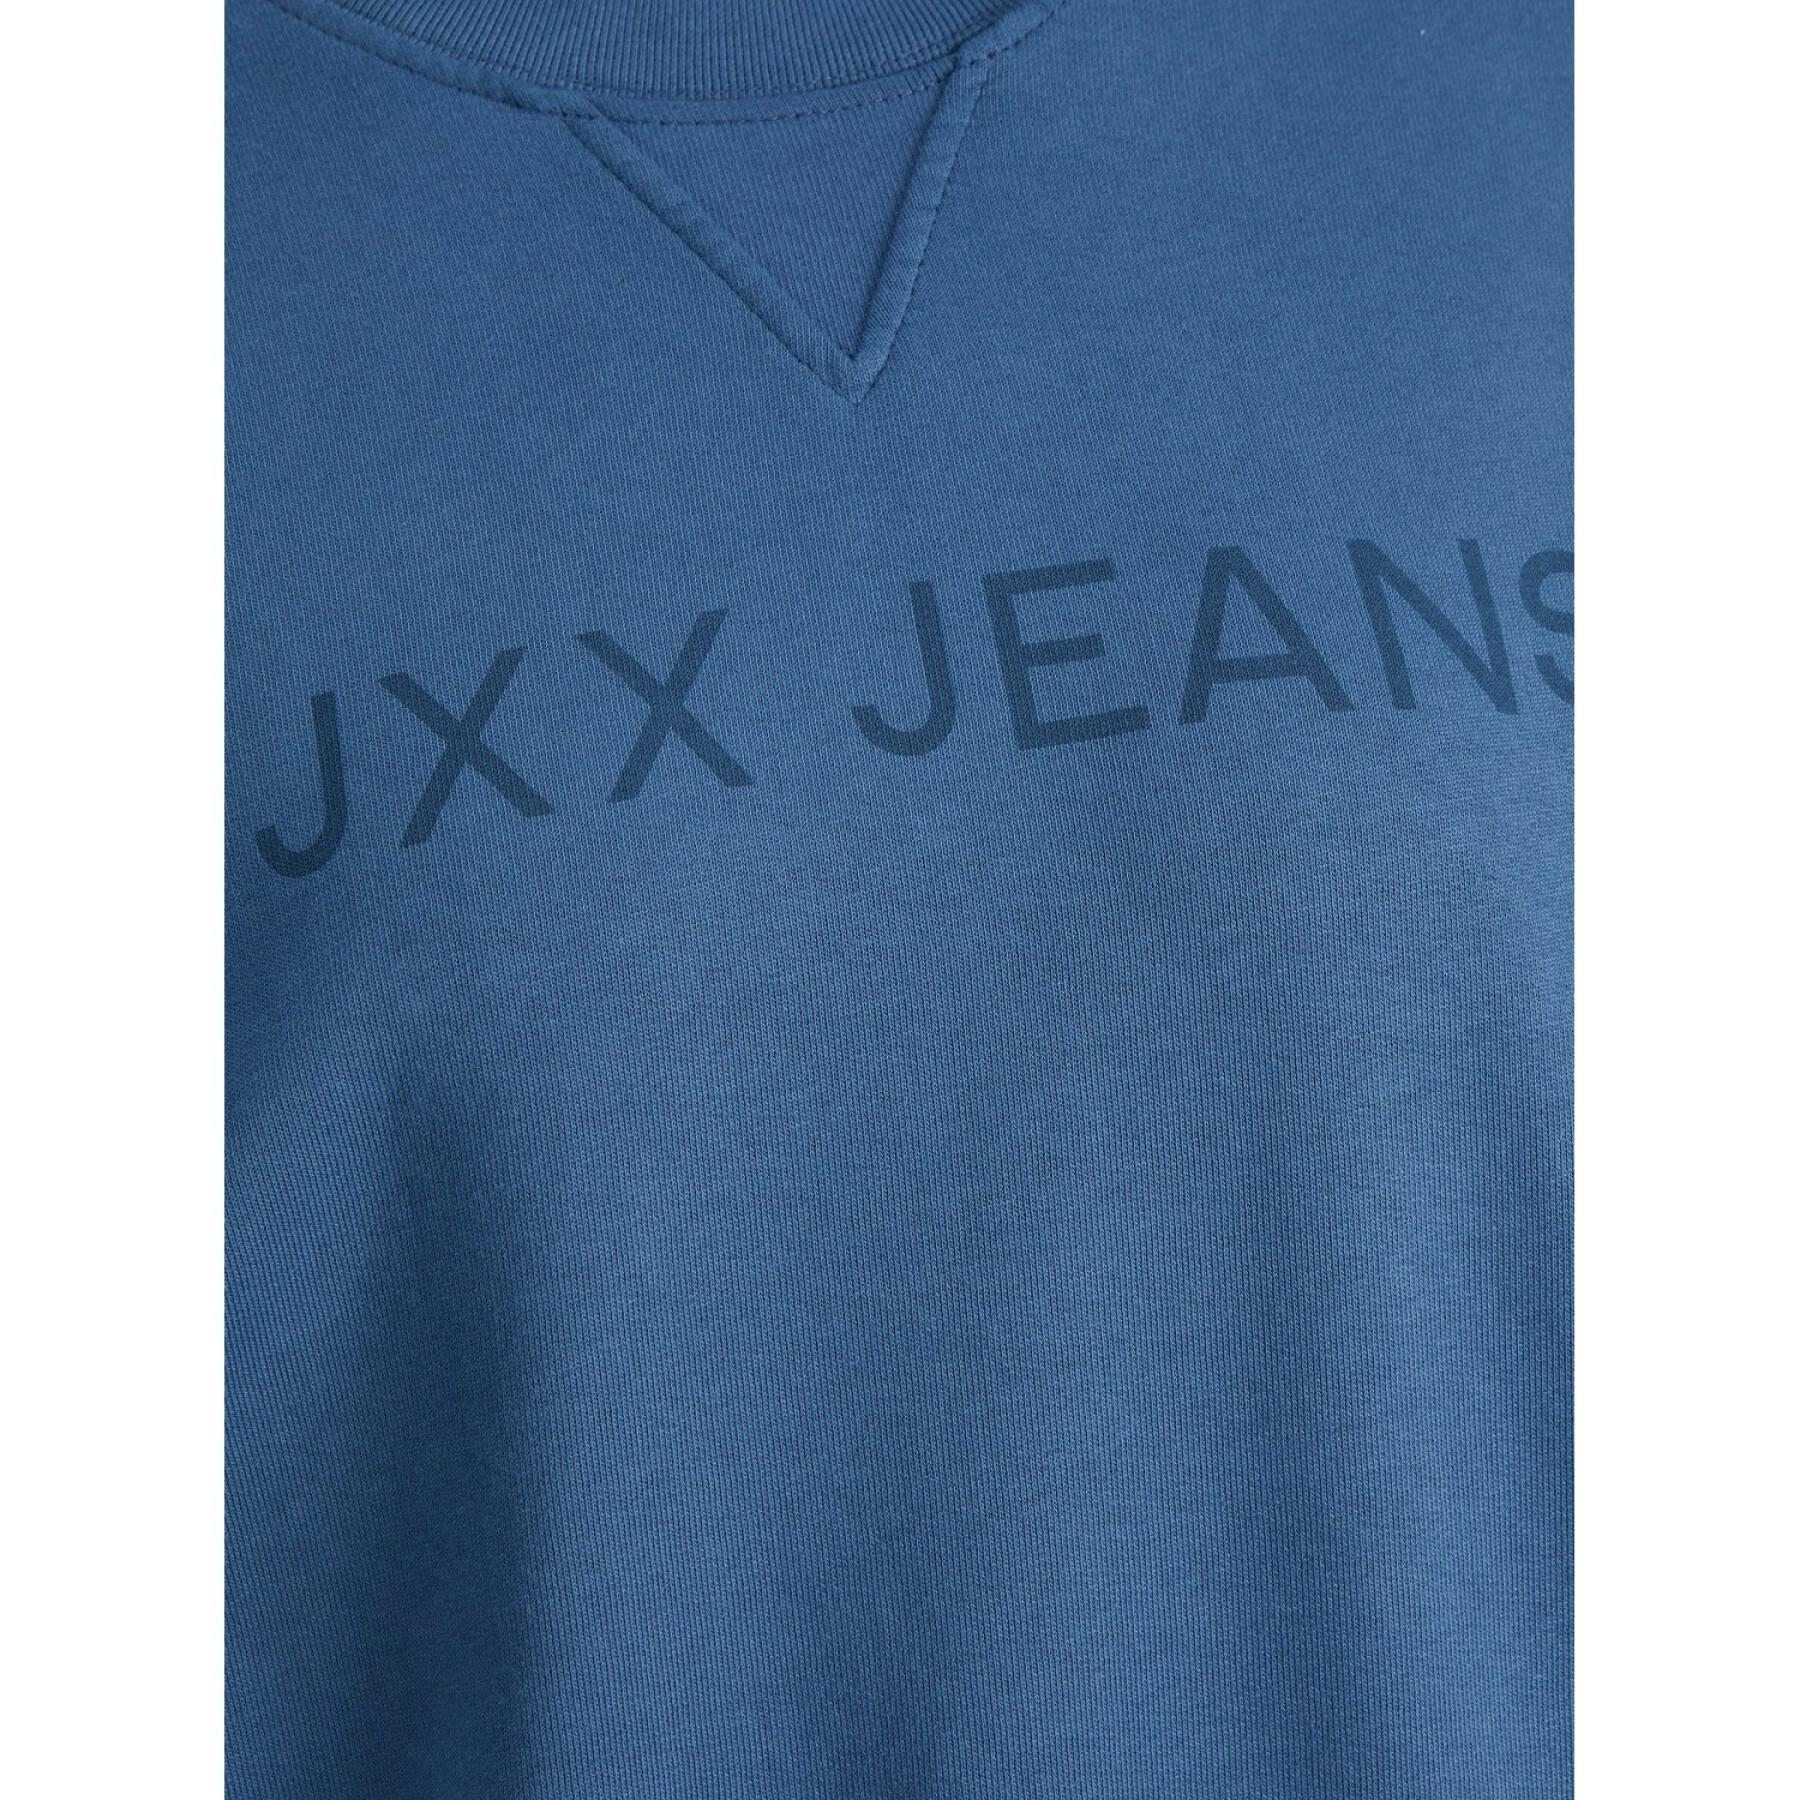 Sweatshirt large Frau JJXX dee